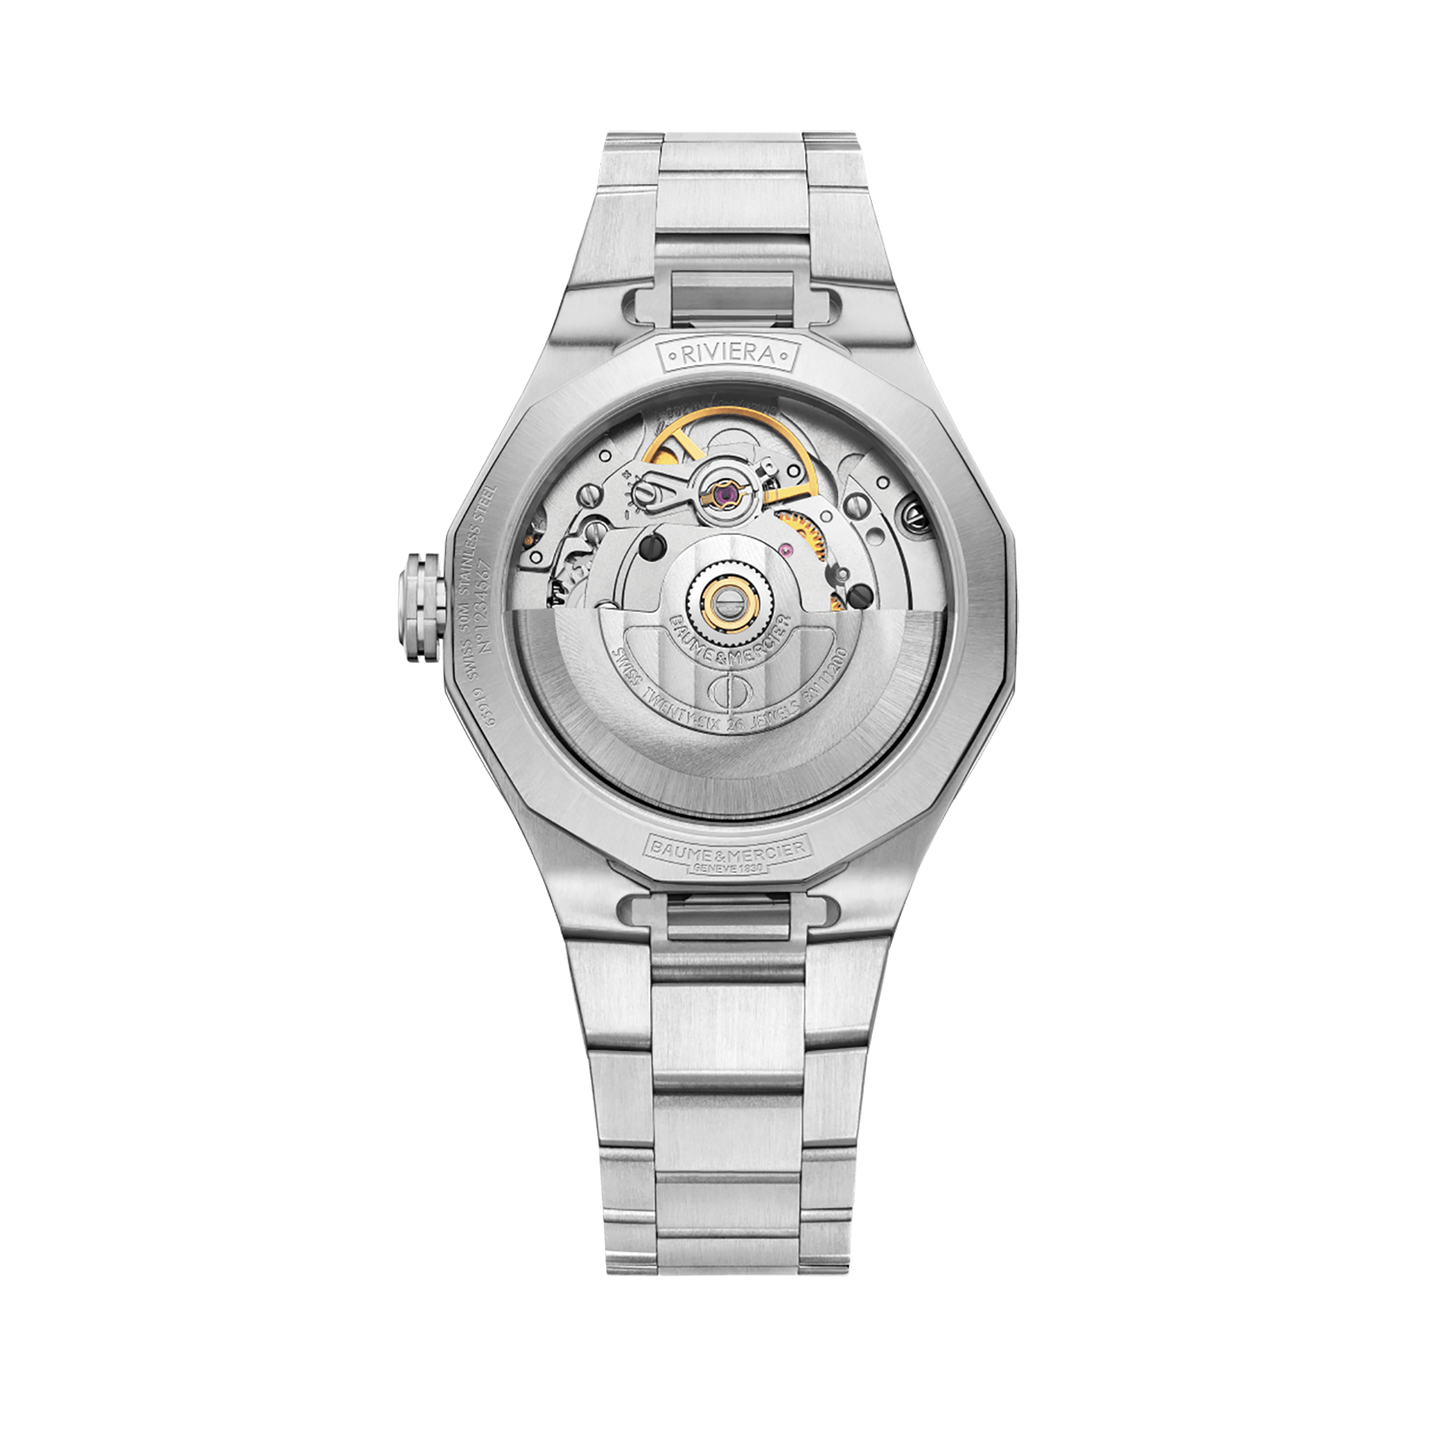 Baume & Mercier Riviera Automatic, Date Display Women's Watch 33mm